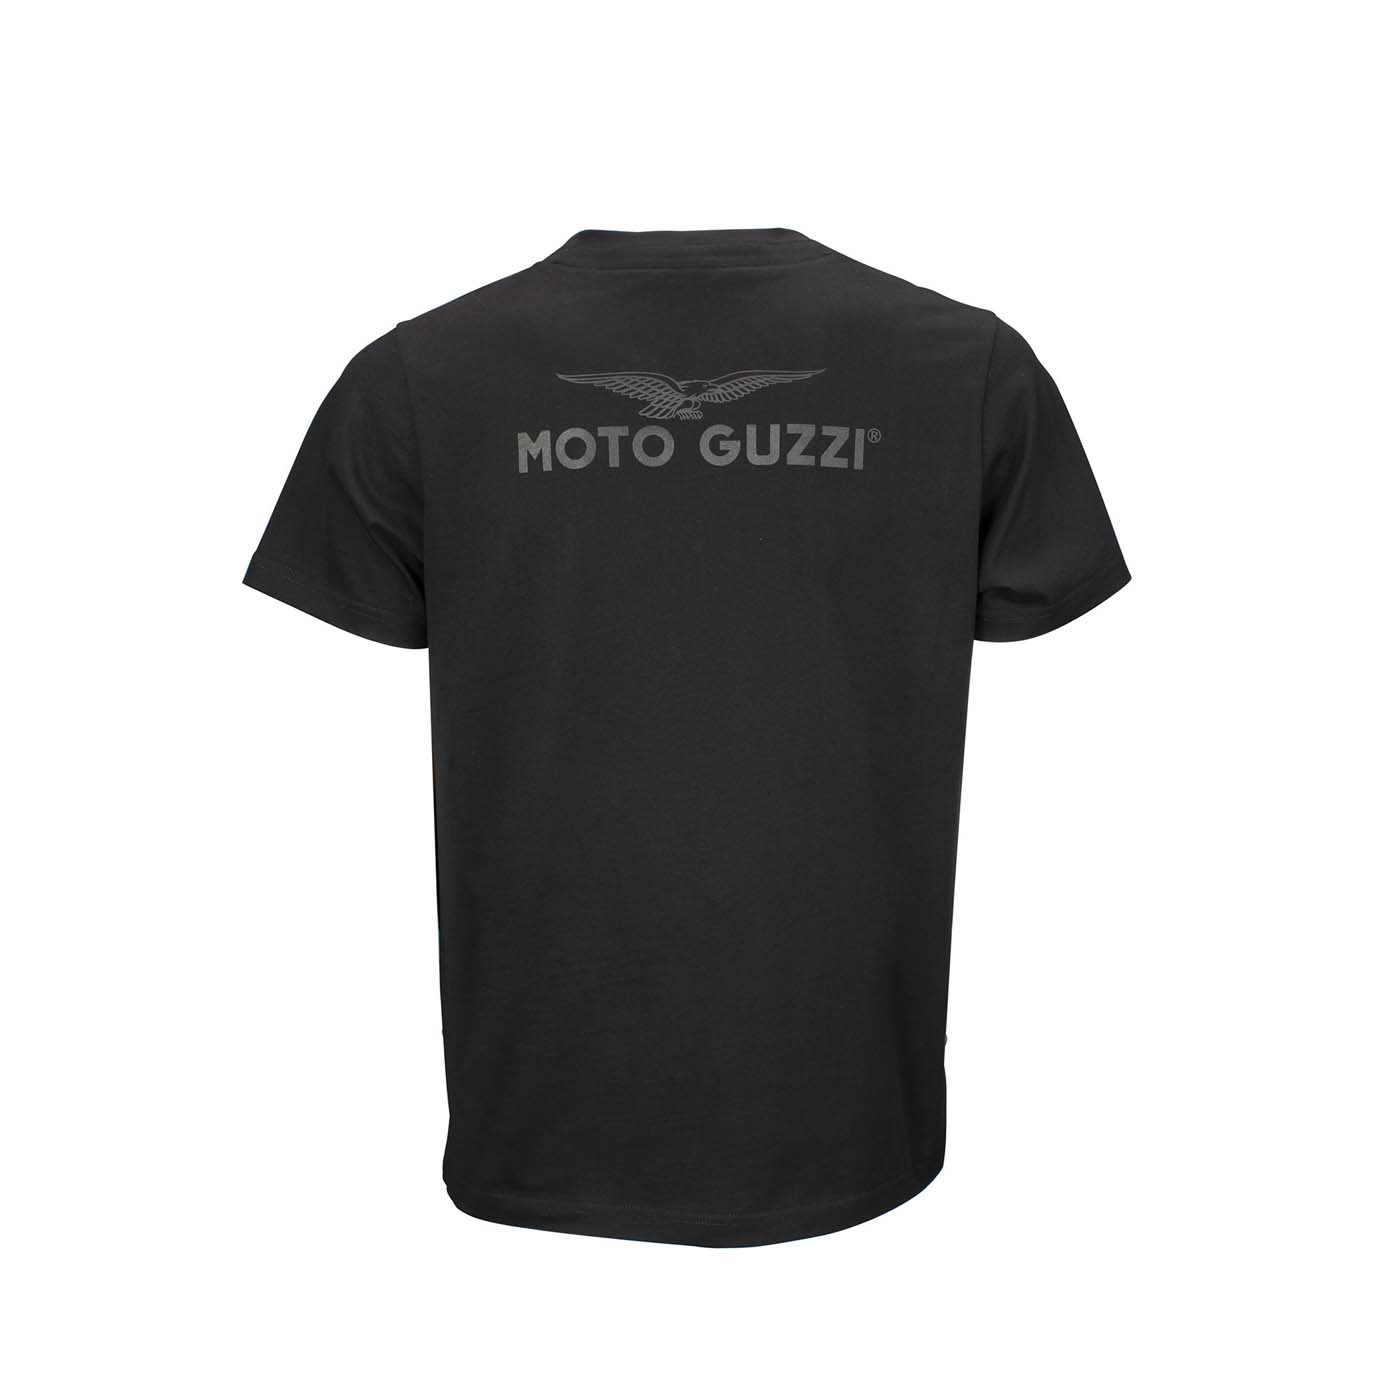 MOTO GUZZI T-SHIRT - BLACK - Moto Guzzi Store USA & Canada